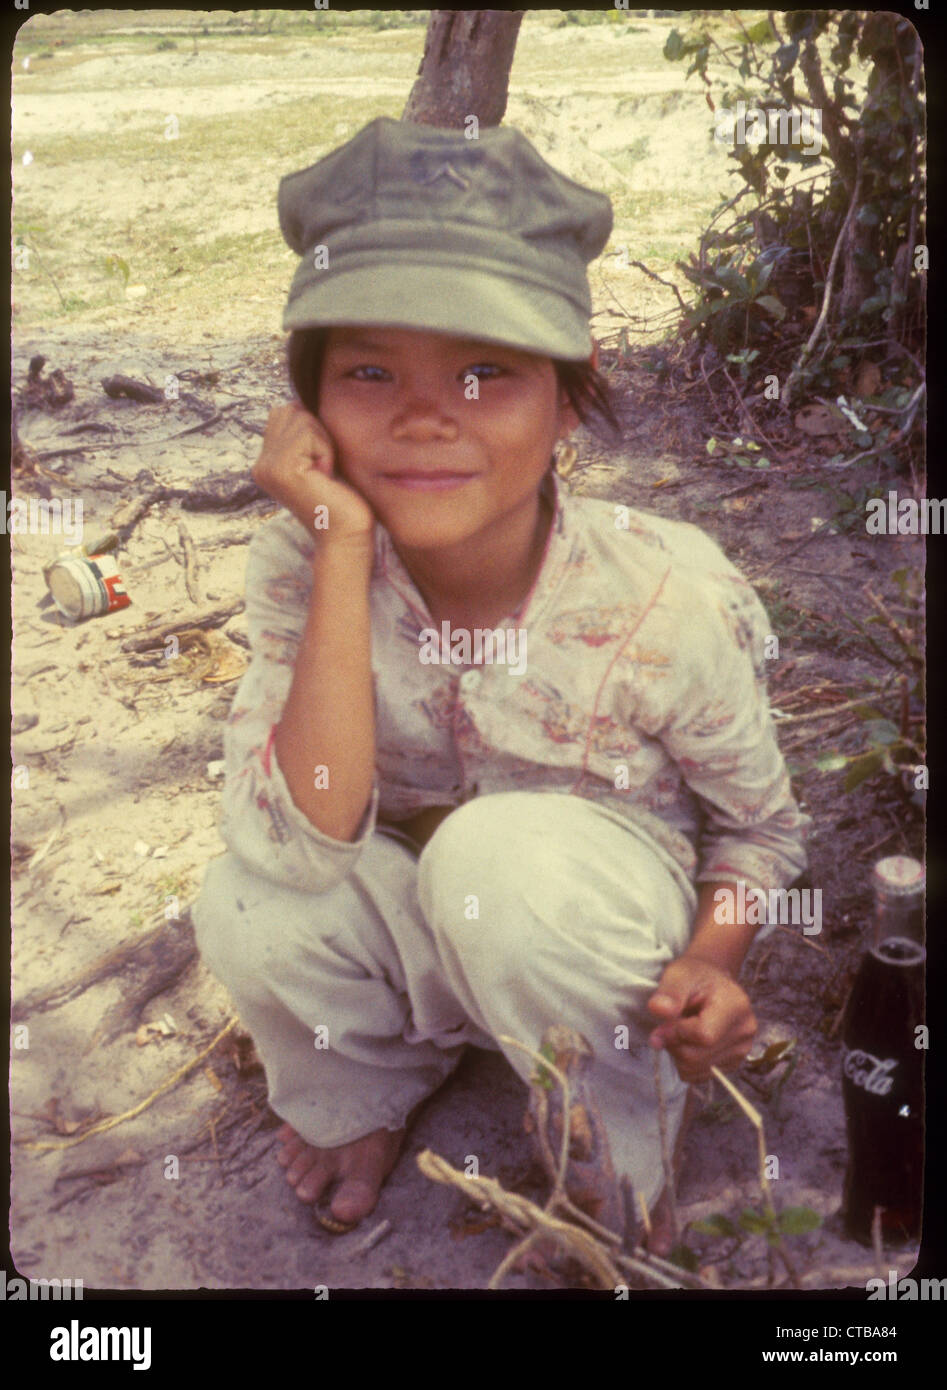 US Marines Vietnam War 1965 small child wearing cap hat Stock Photo